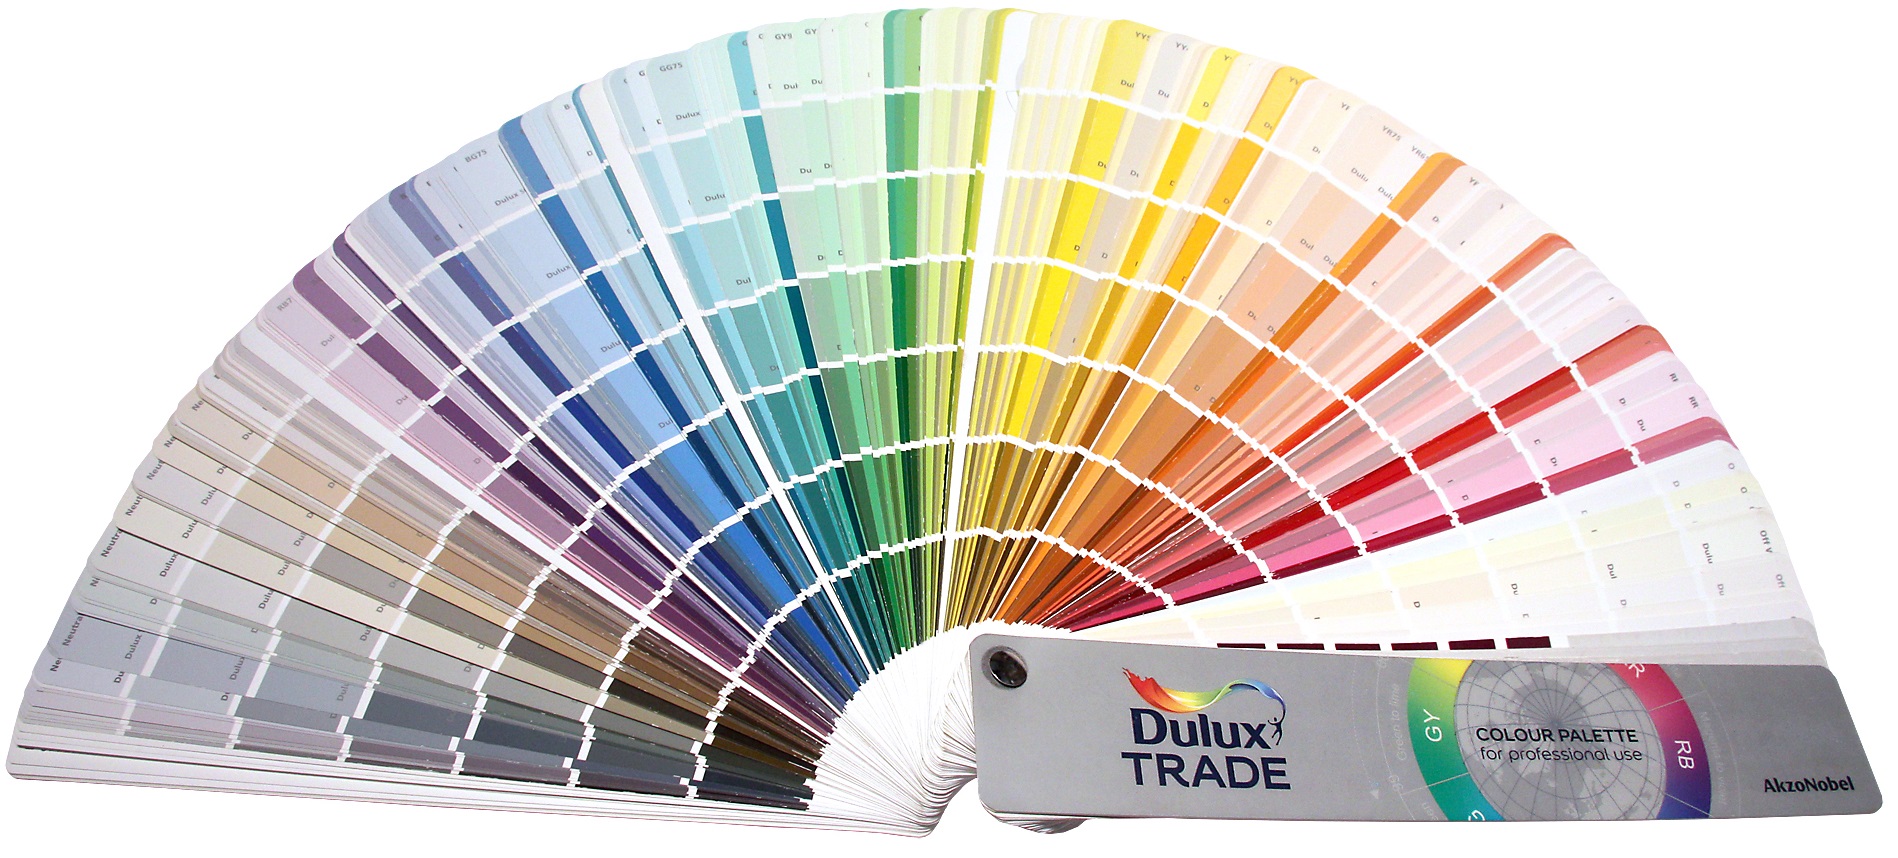 Dulux Trade Colour Palette, цена -  колеровочный веер Дулюкс .